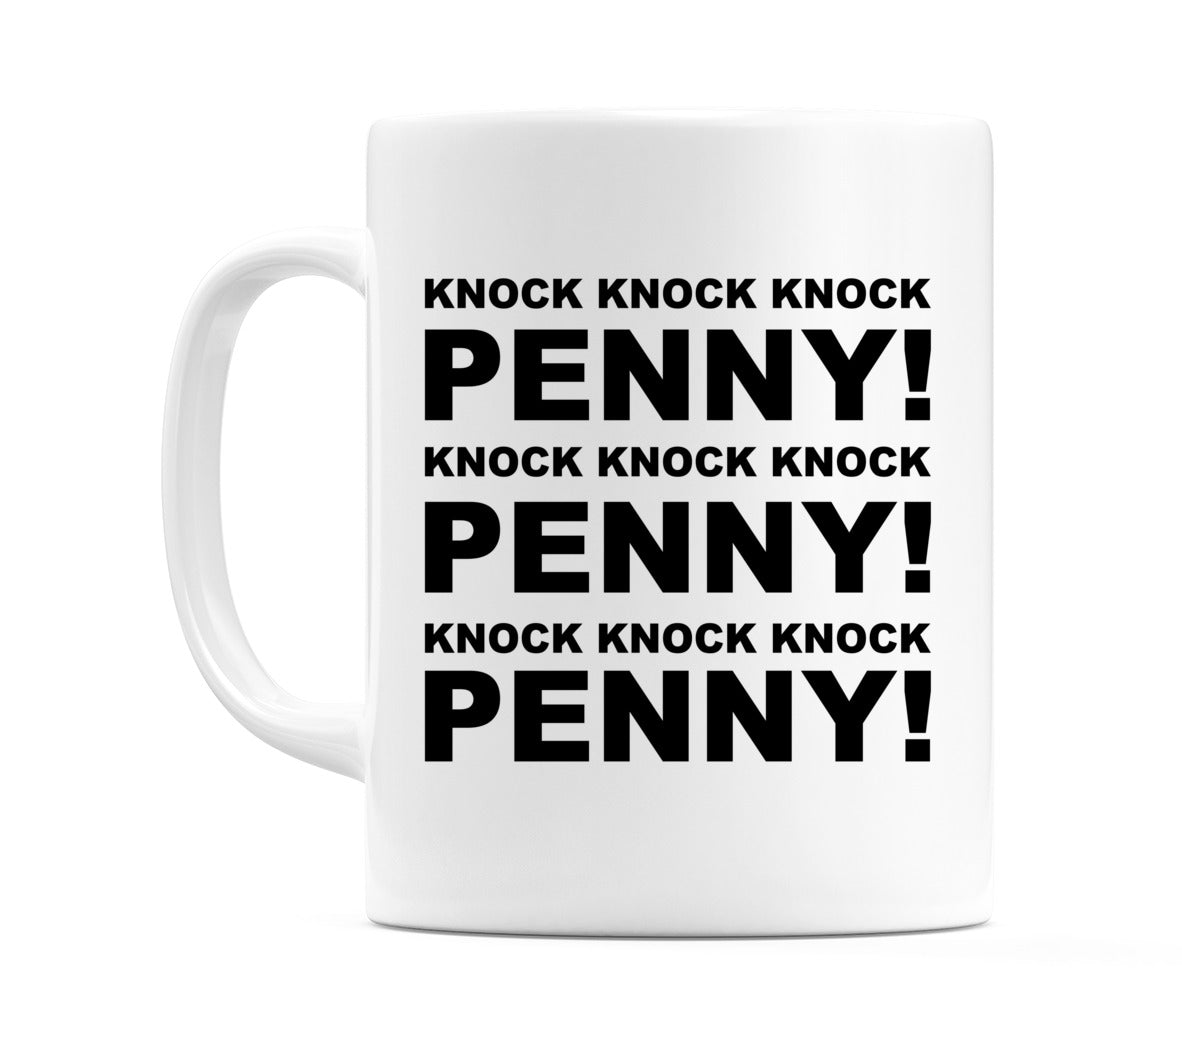 Knock Knock Knock Penny! Mug